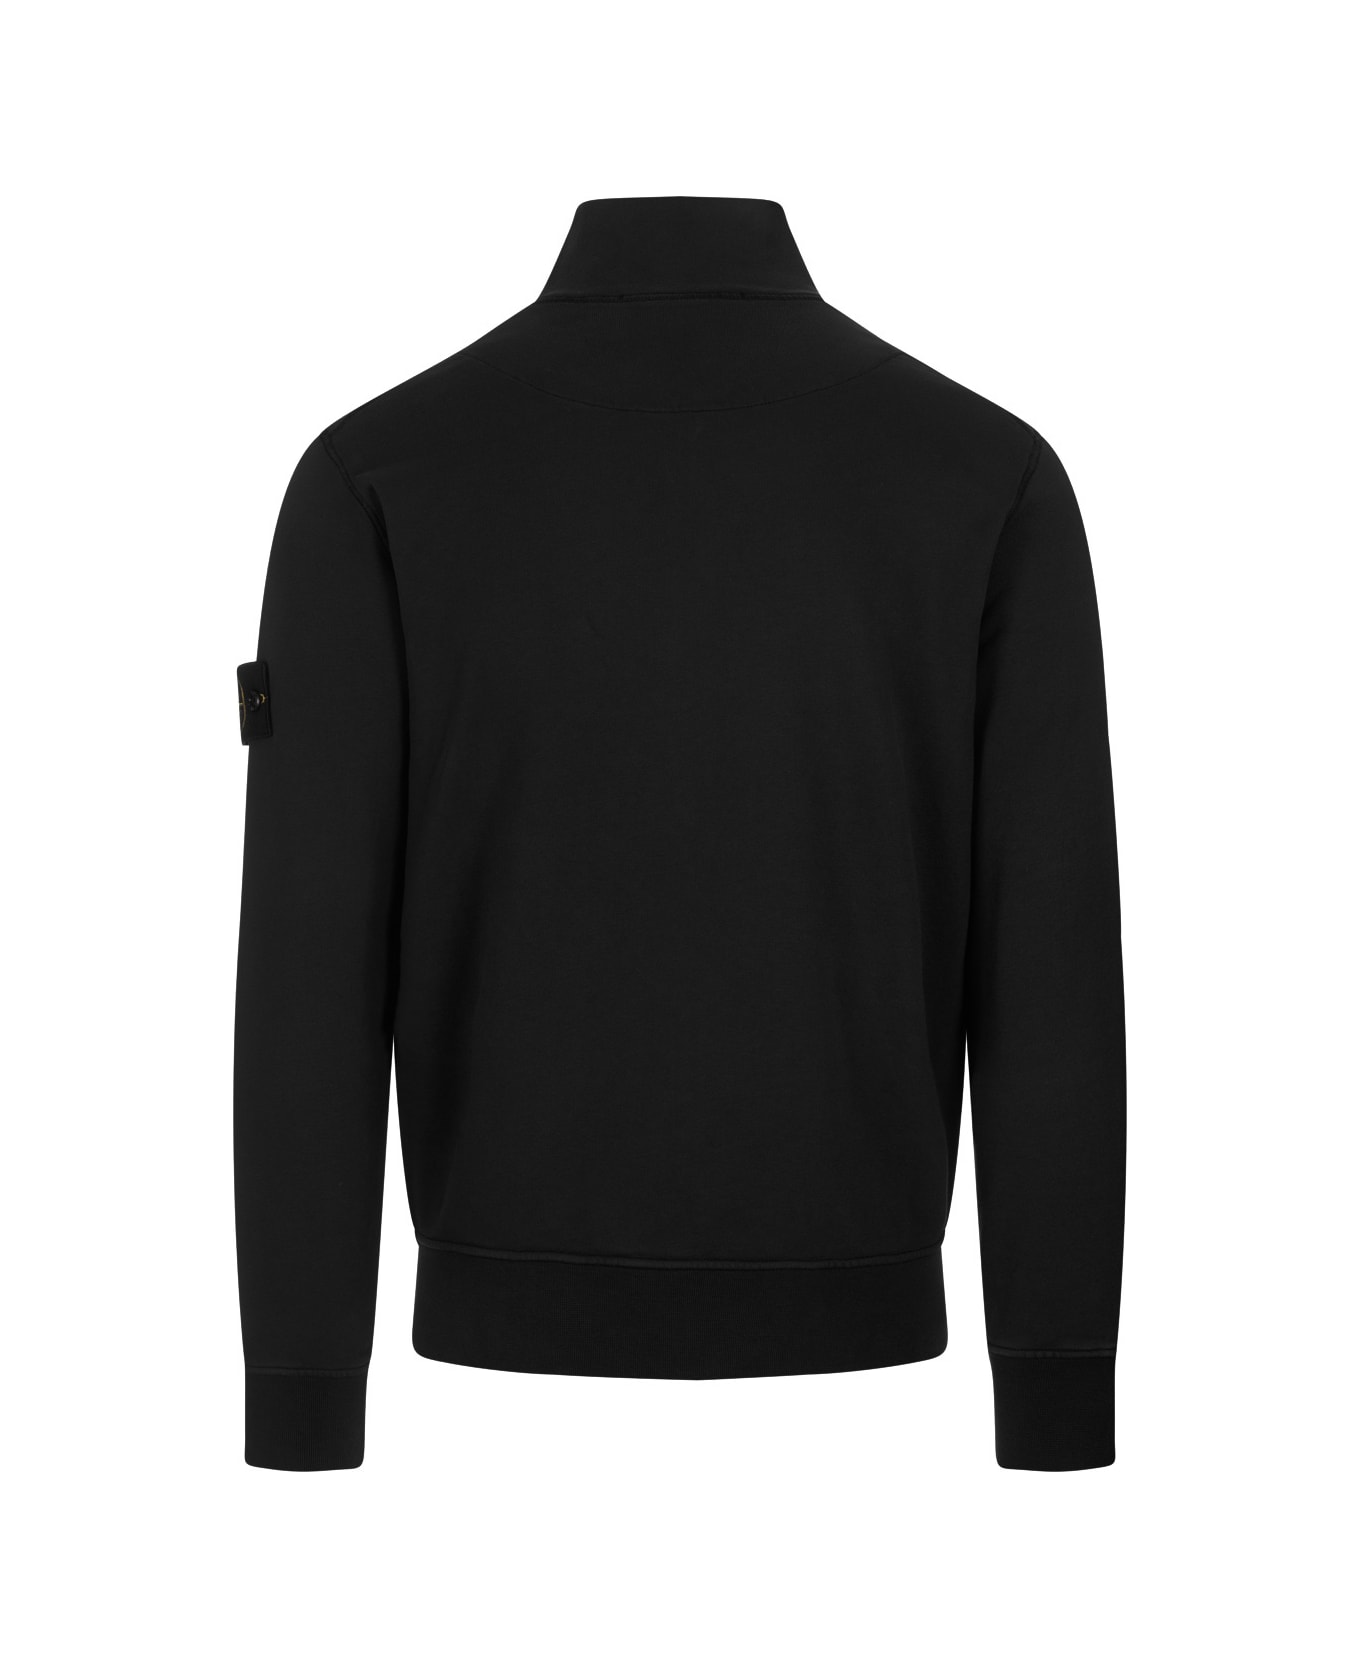 Stone Island Black Sweatshirt With Zip - Black